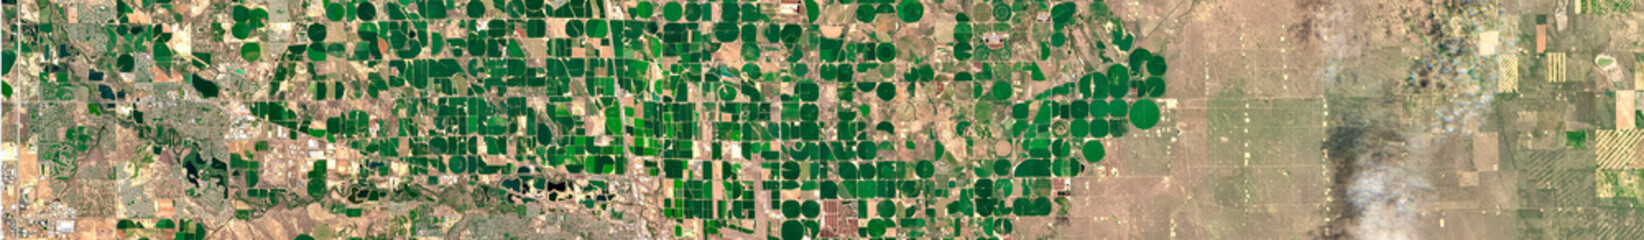 Center pivot irrigation field 
